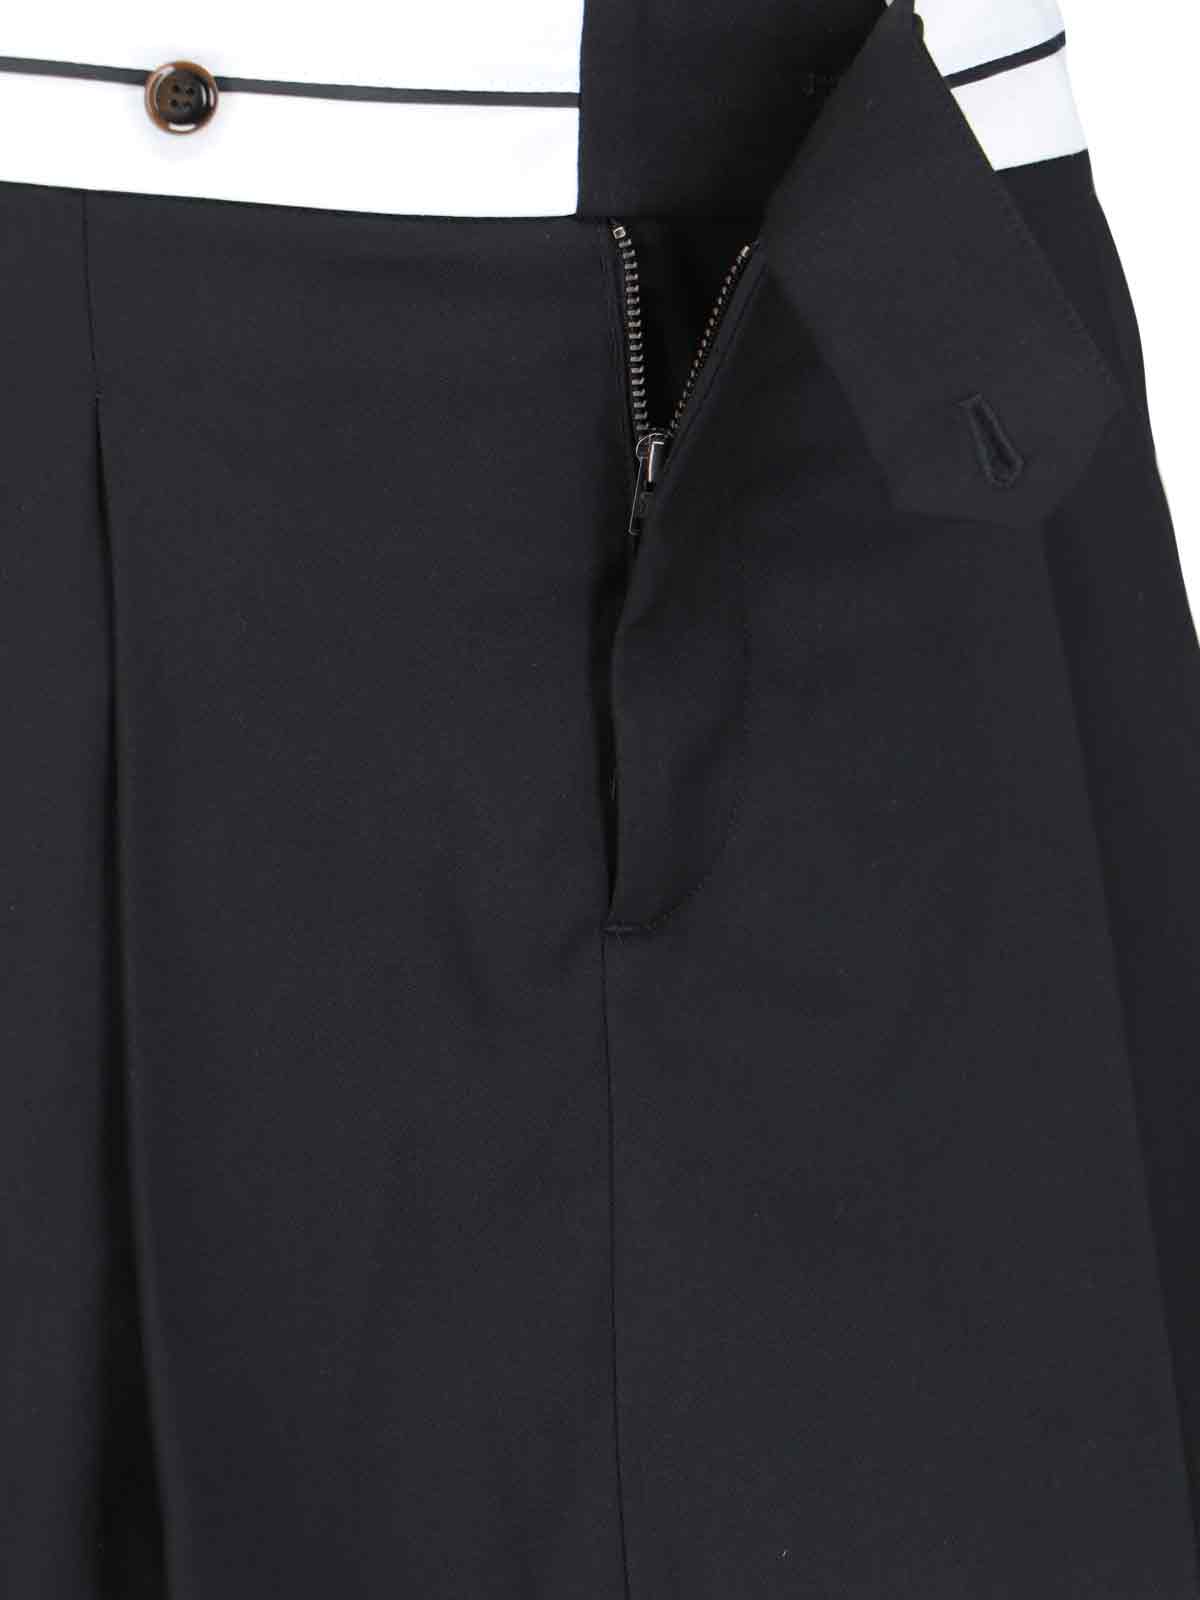 Shop The Garment Mini Skirt Pluto In Black